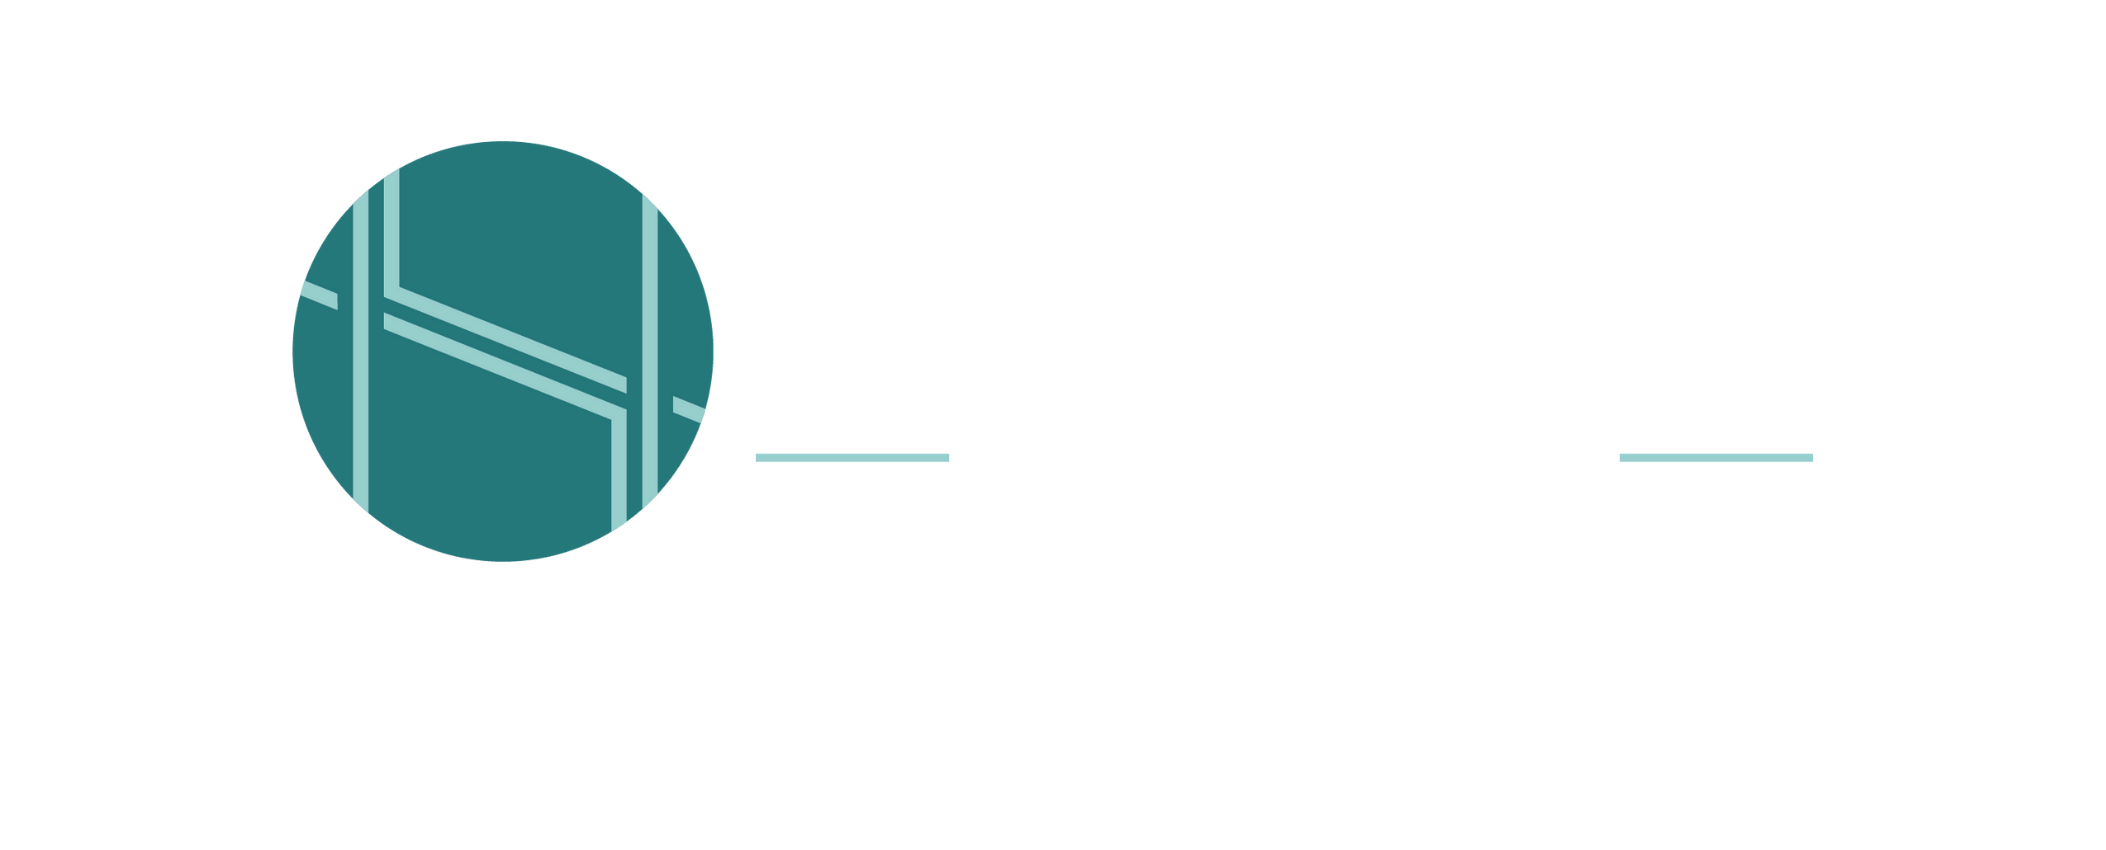 Hanning Law Ltd